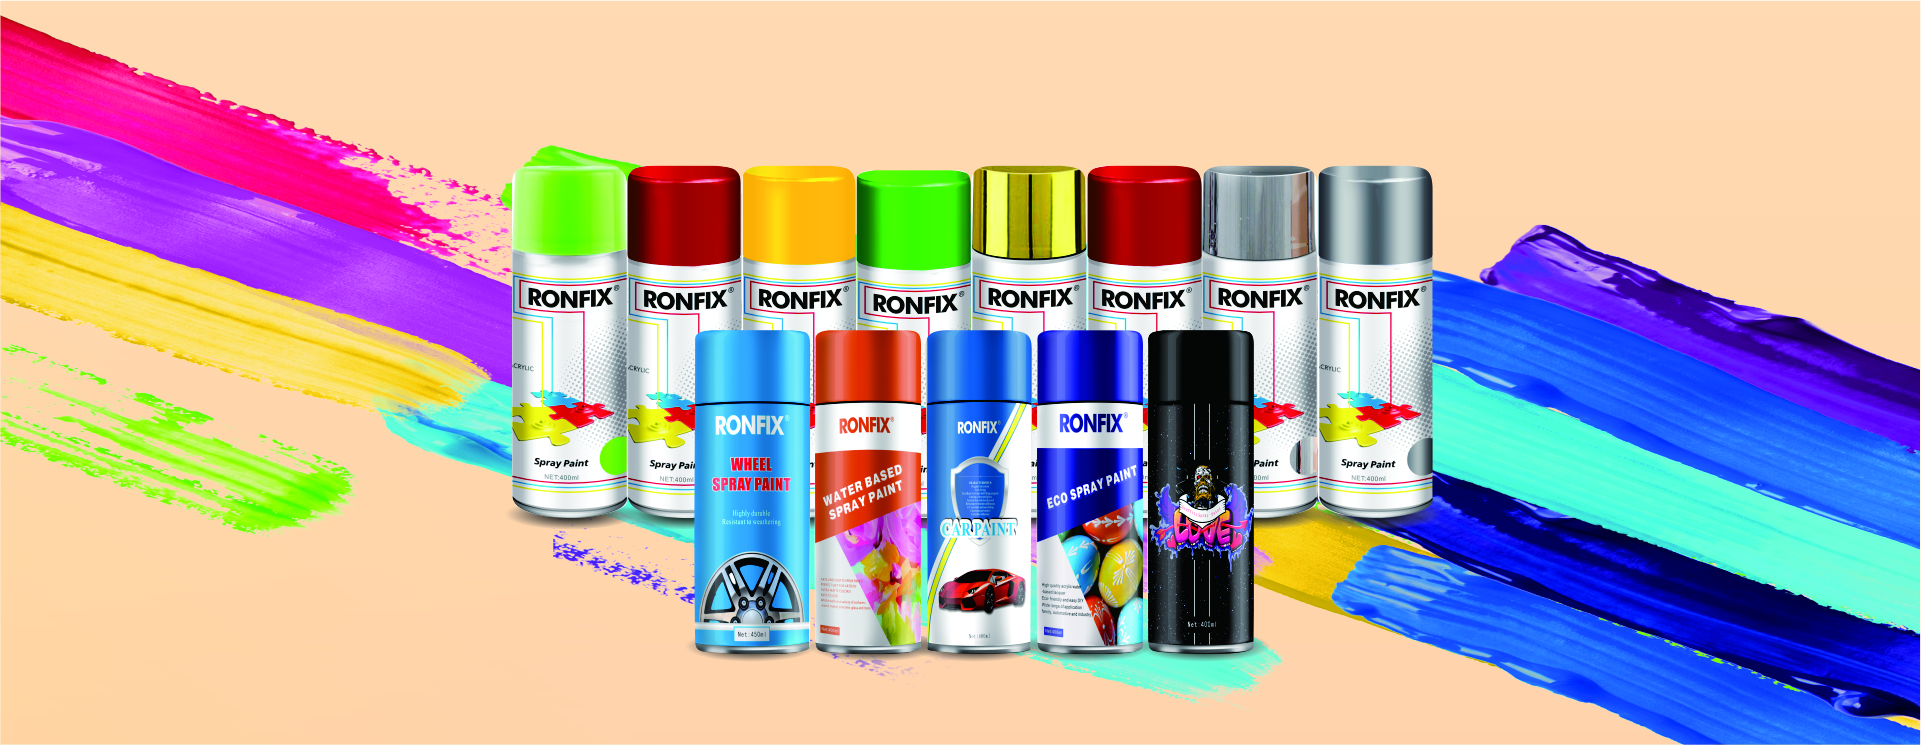 FUNGOM Spray Paint Wholesale